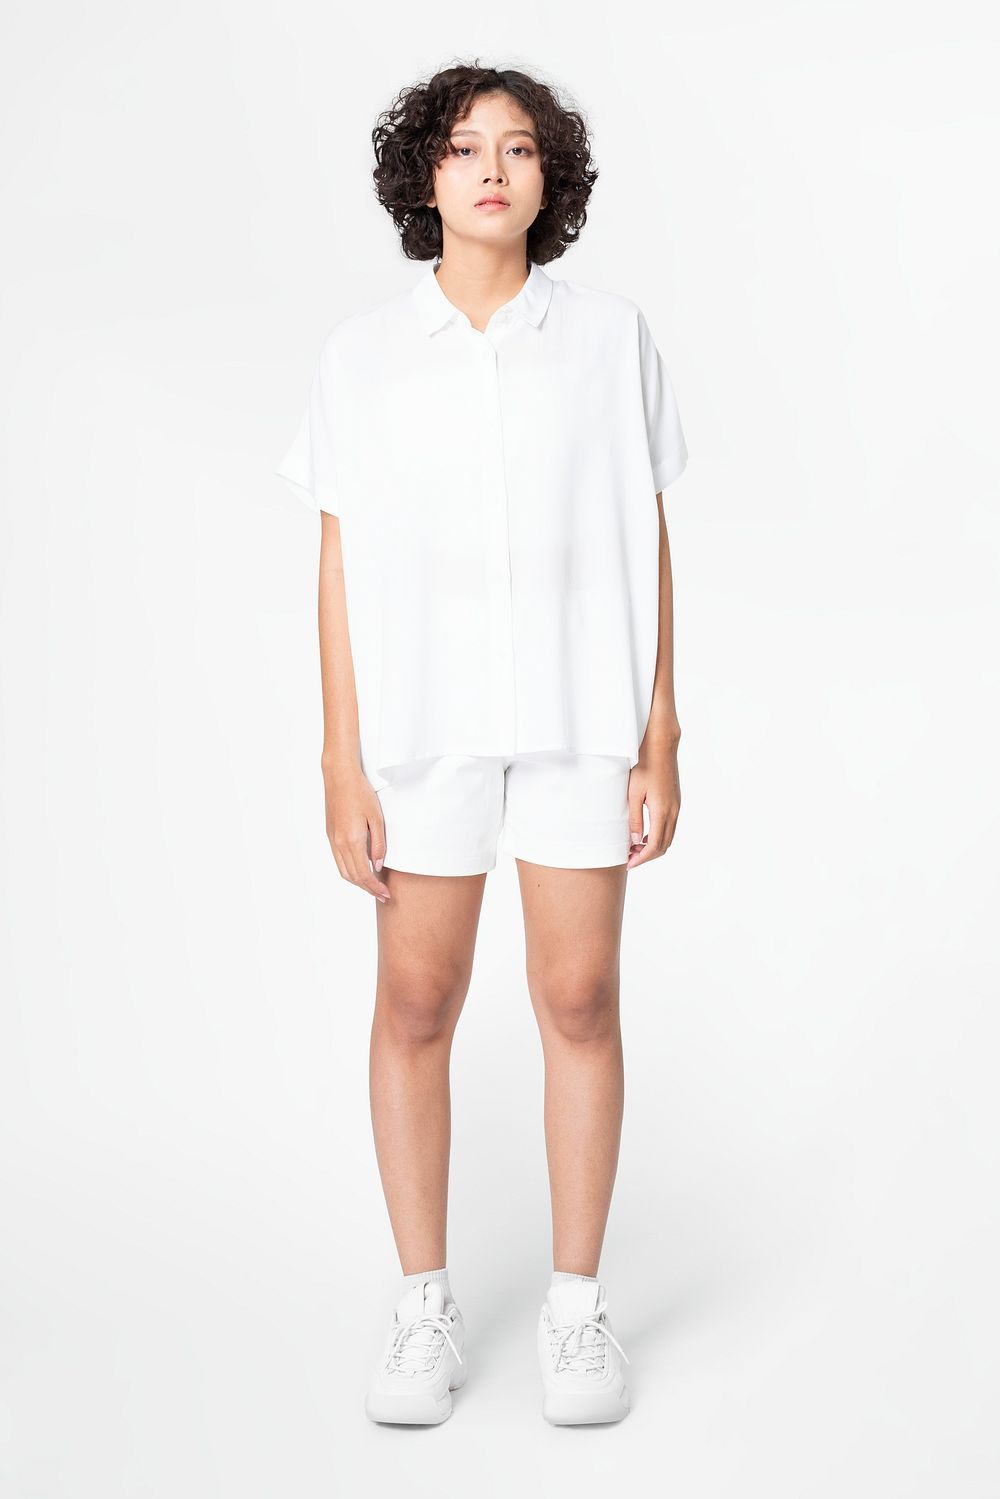 Women’s blouse mockup psd with shorts | Premium PSD Mockup - rawpixel